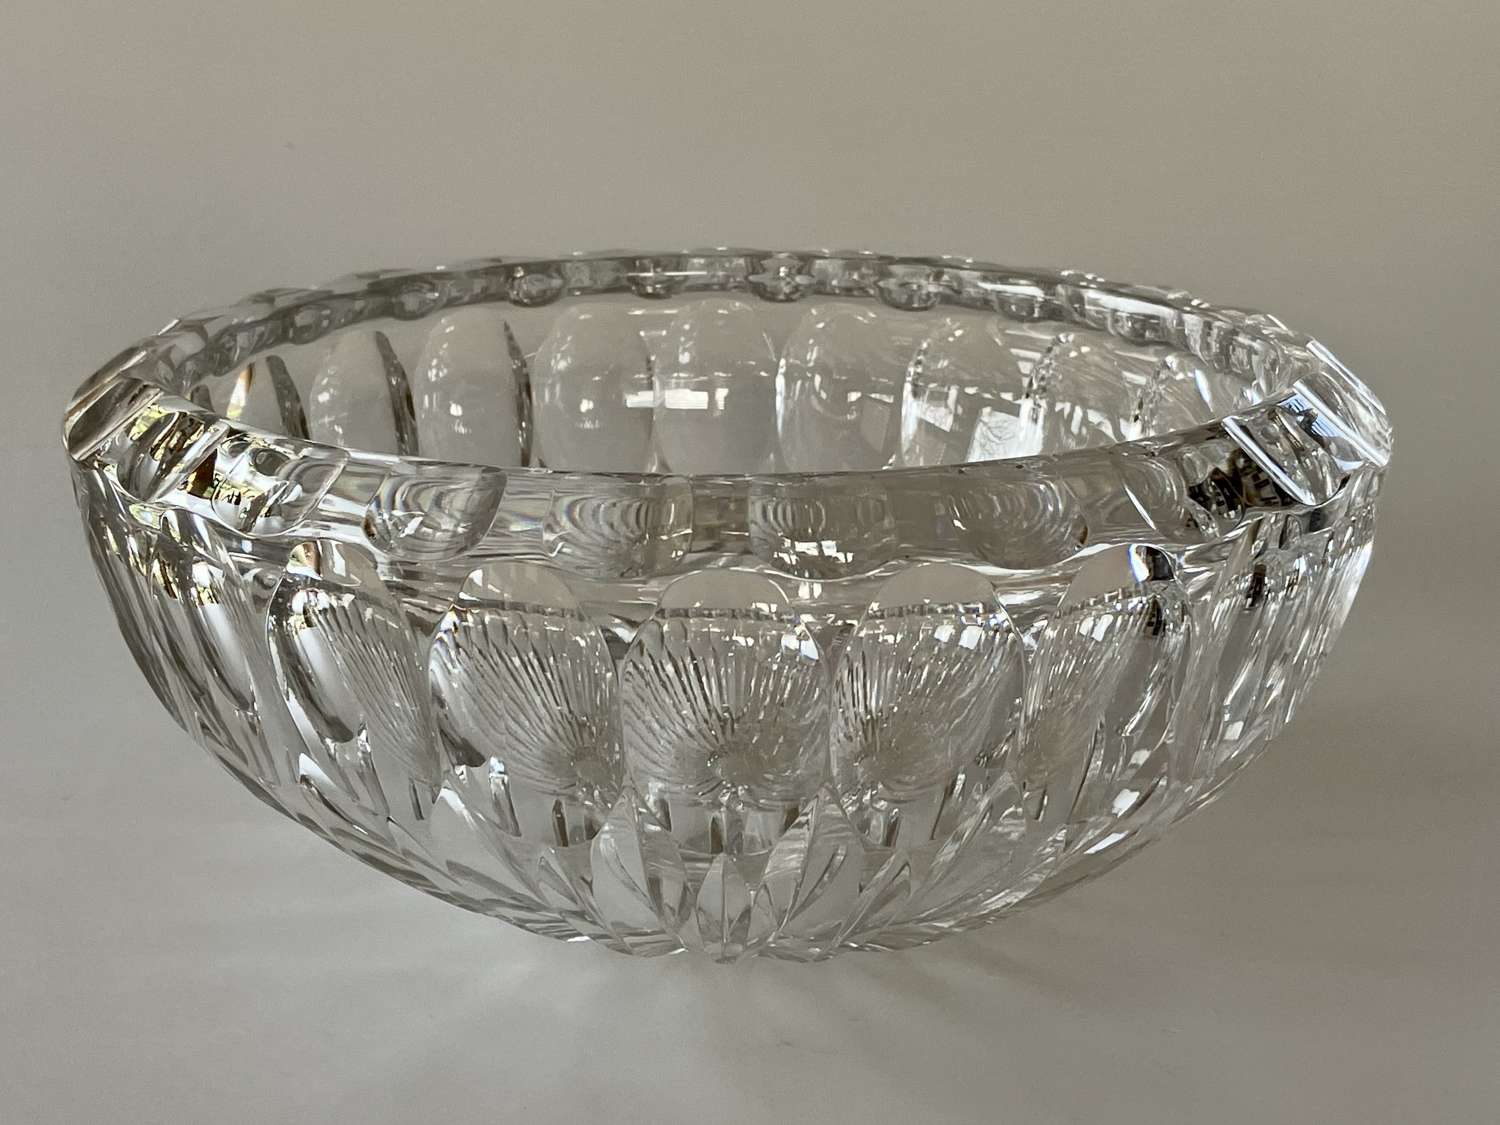 Cut glass bowl, Whitefriars